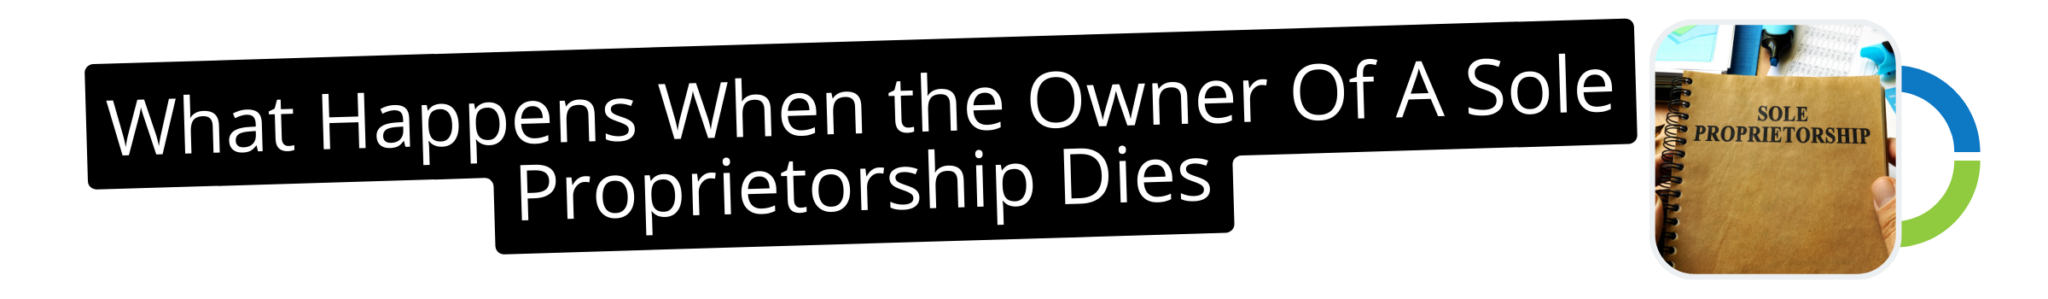 What-Happens-When-the-Owner-Of-A-Sole-Proprietorship-Dies